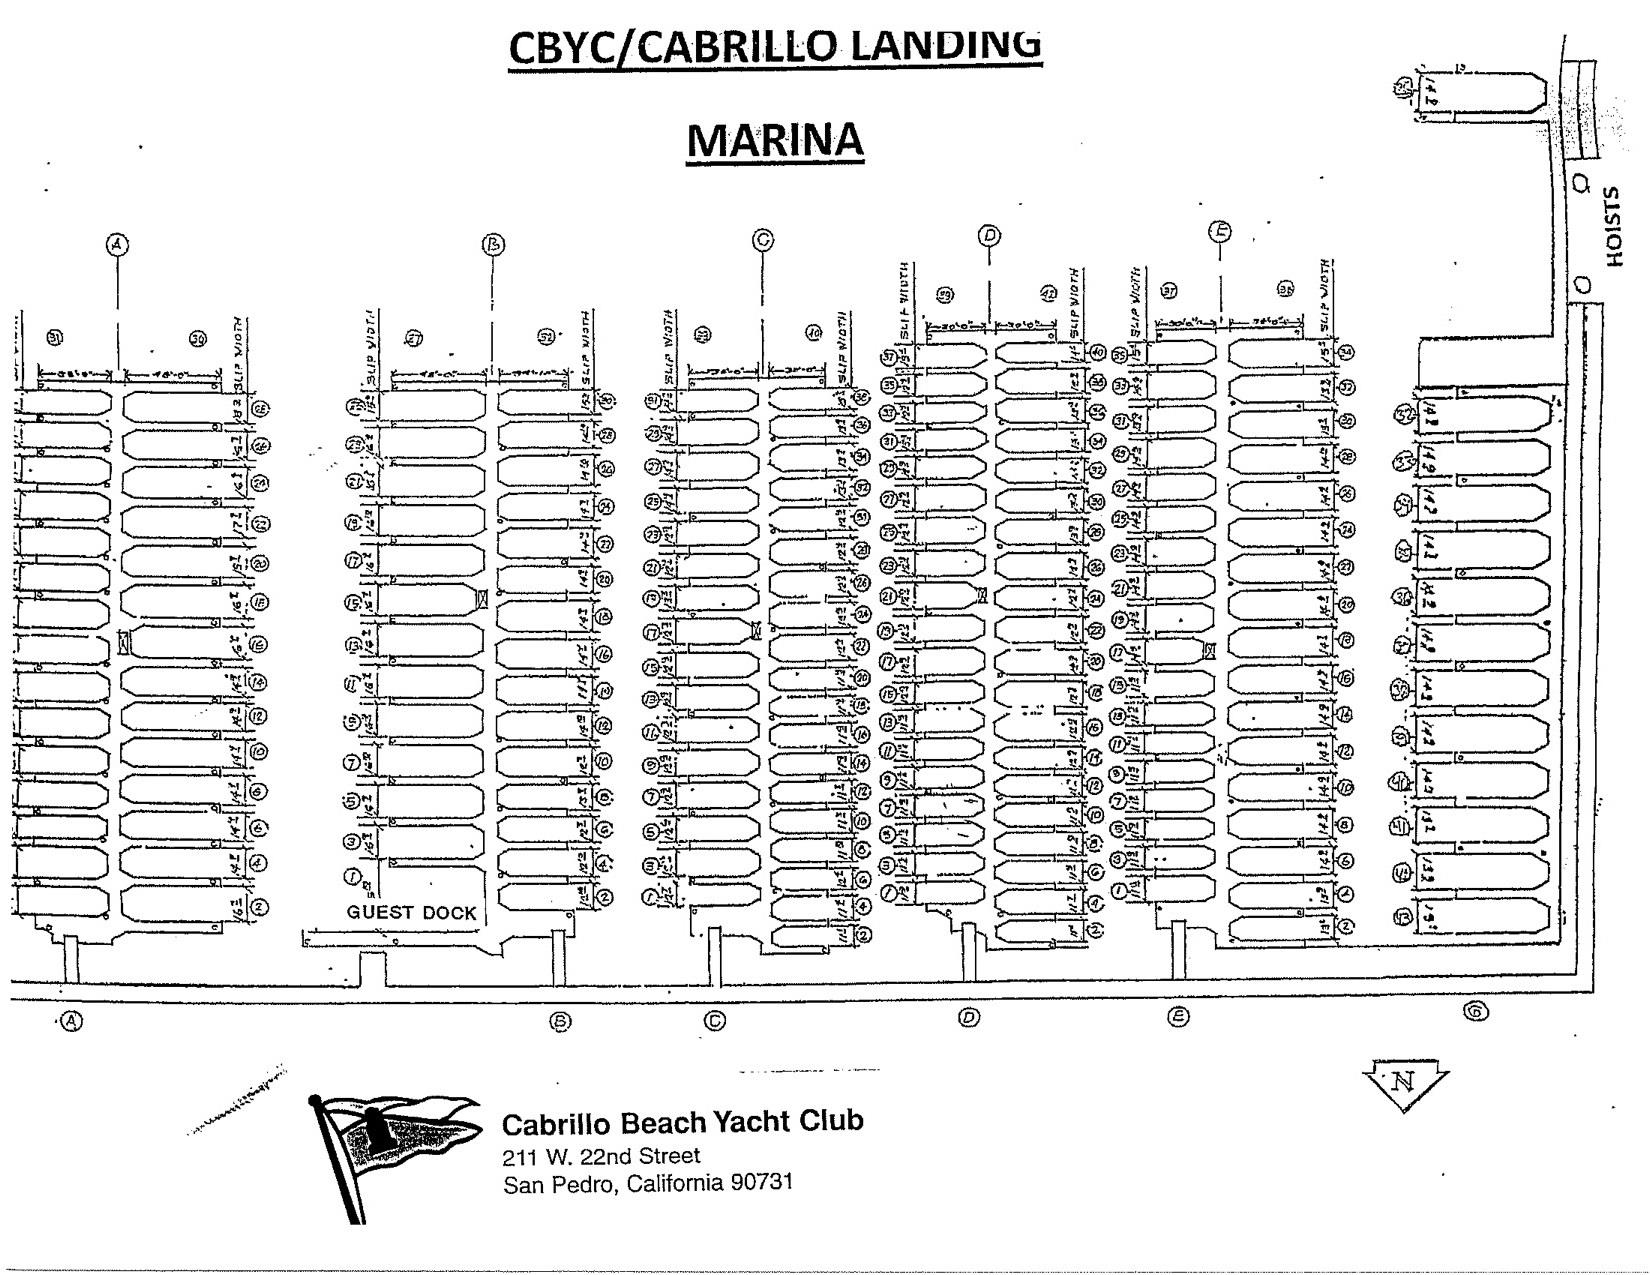 Cabrillo Yacht Club Marina Map